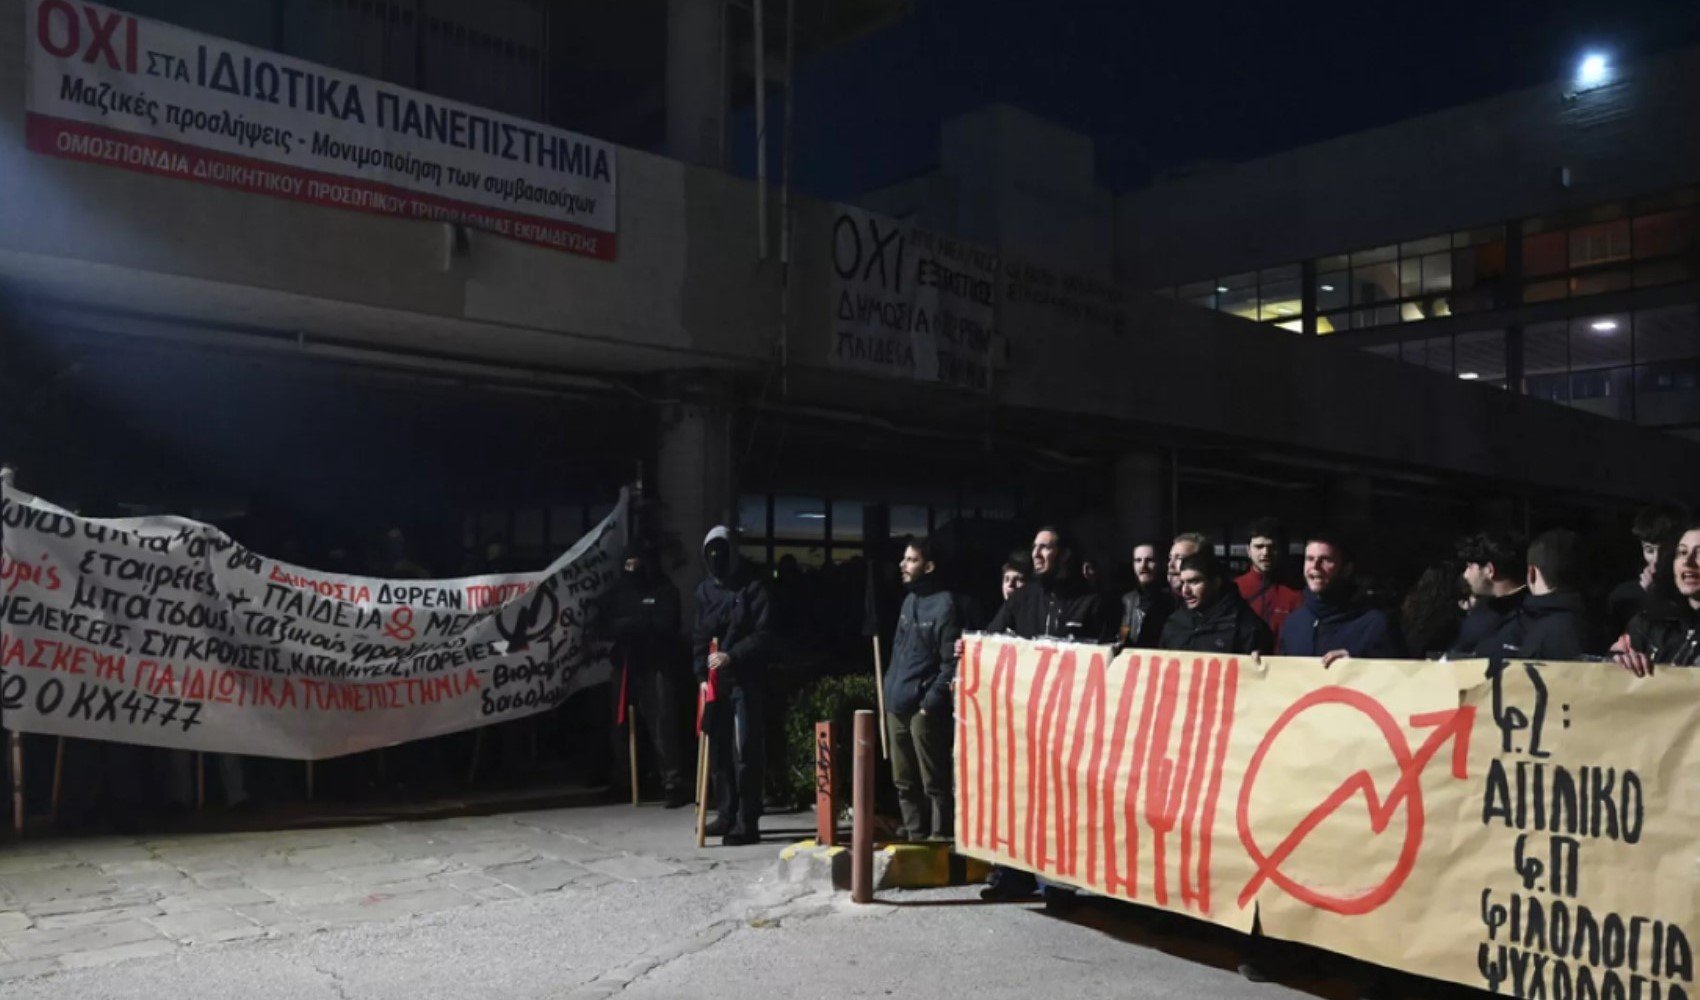 Yunanistan'da 'özel üniversite' yasa tasarısı protesto edildi